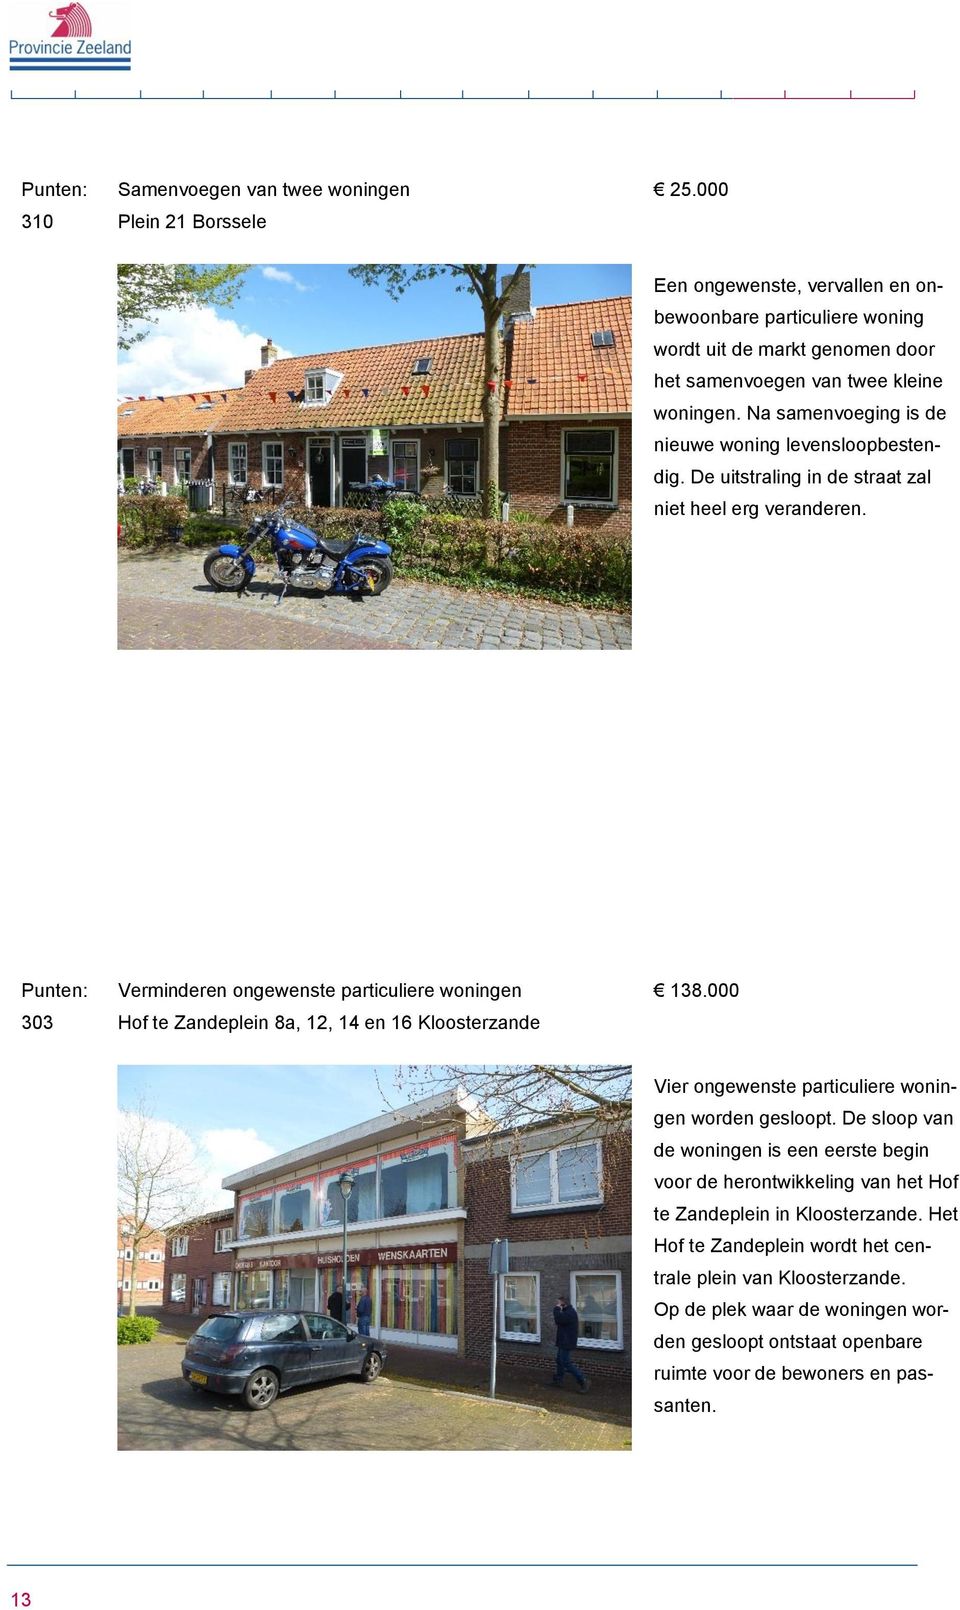 303 Verminderen ongewenste particuliere woningen Hof te Zandeplein 8a, 12, 14 en 16 Kloosterzande 138.000 Vier ongewenste particuliere woningen worden gesloopt.